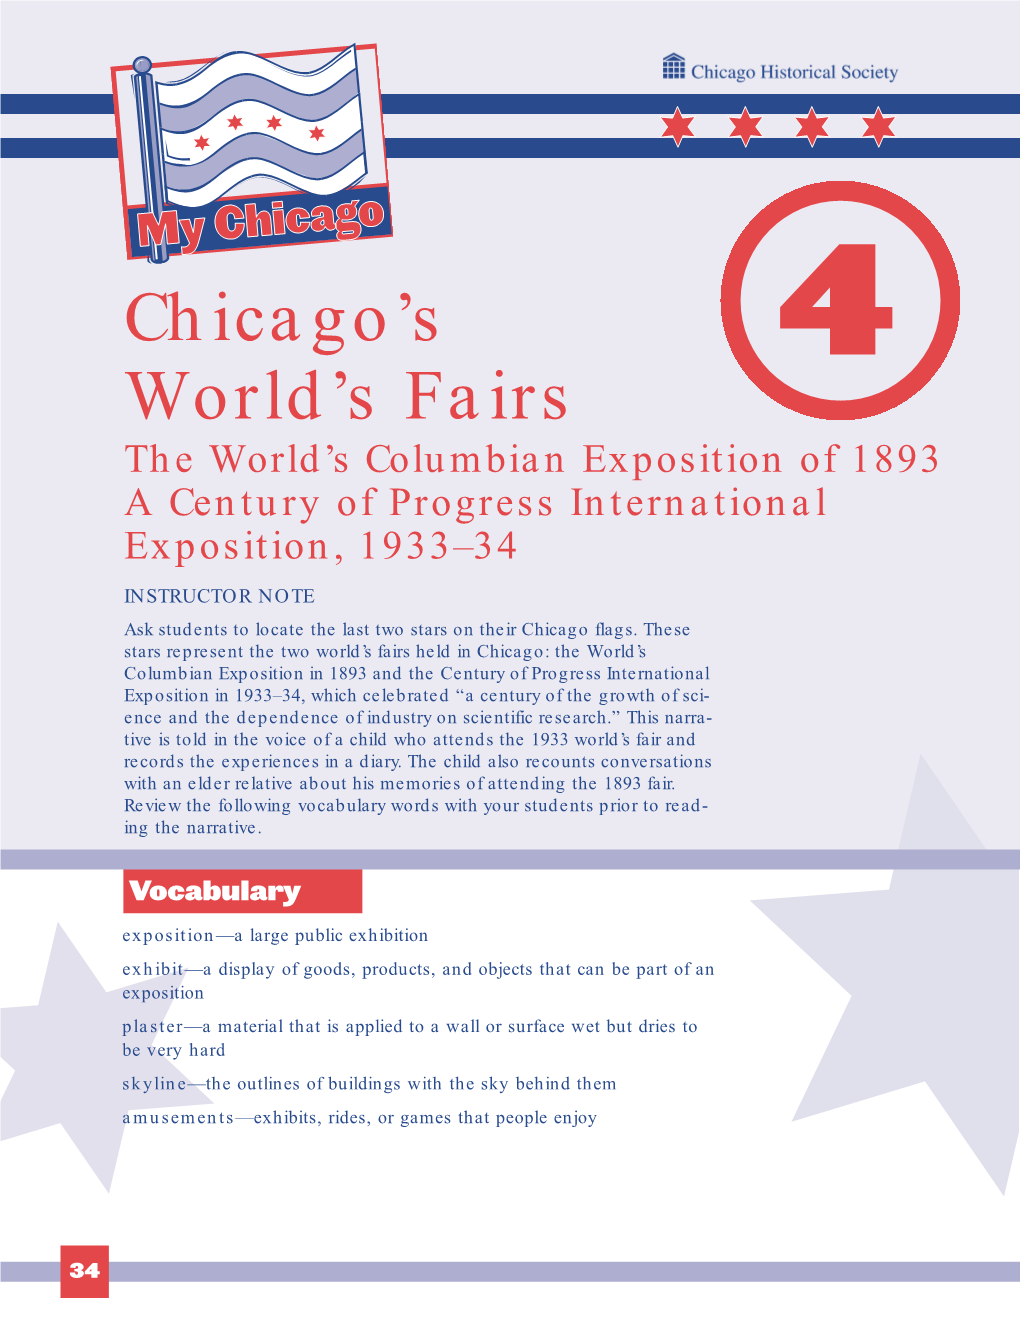 Chicago's World's Fairs